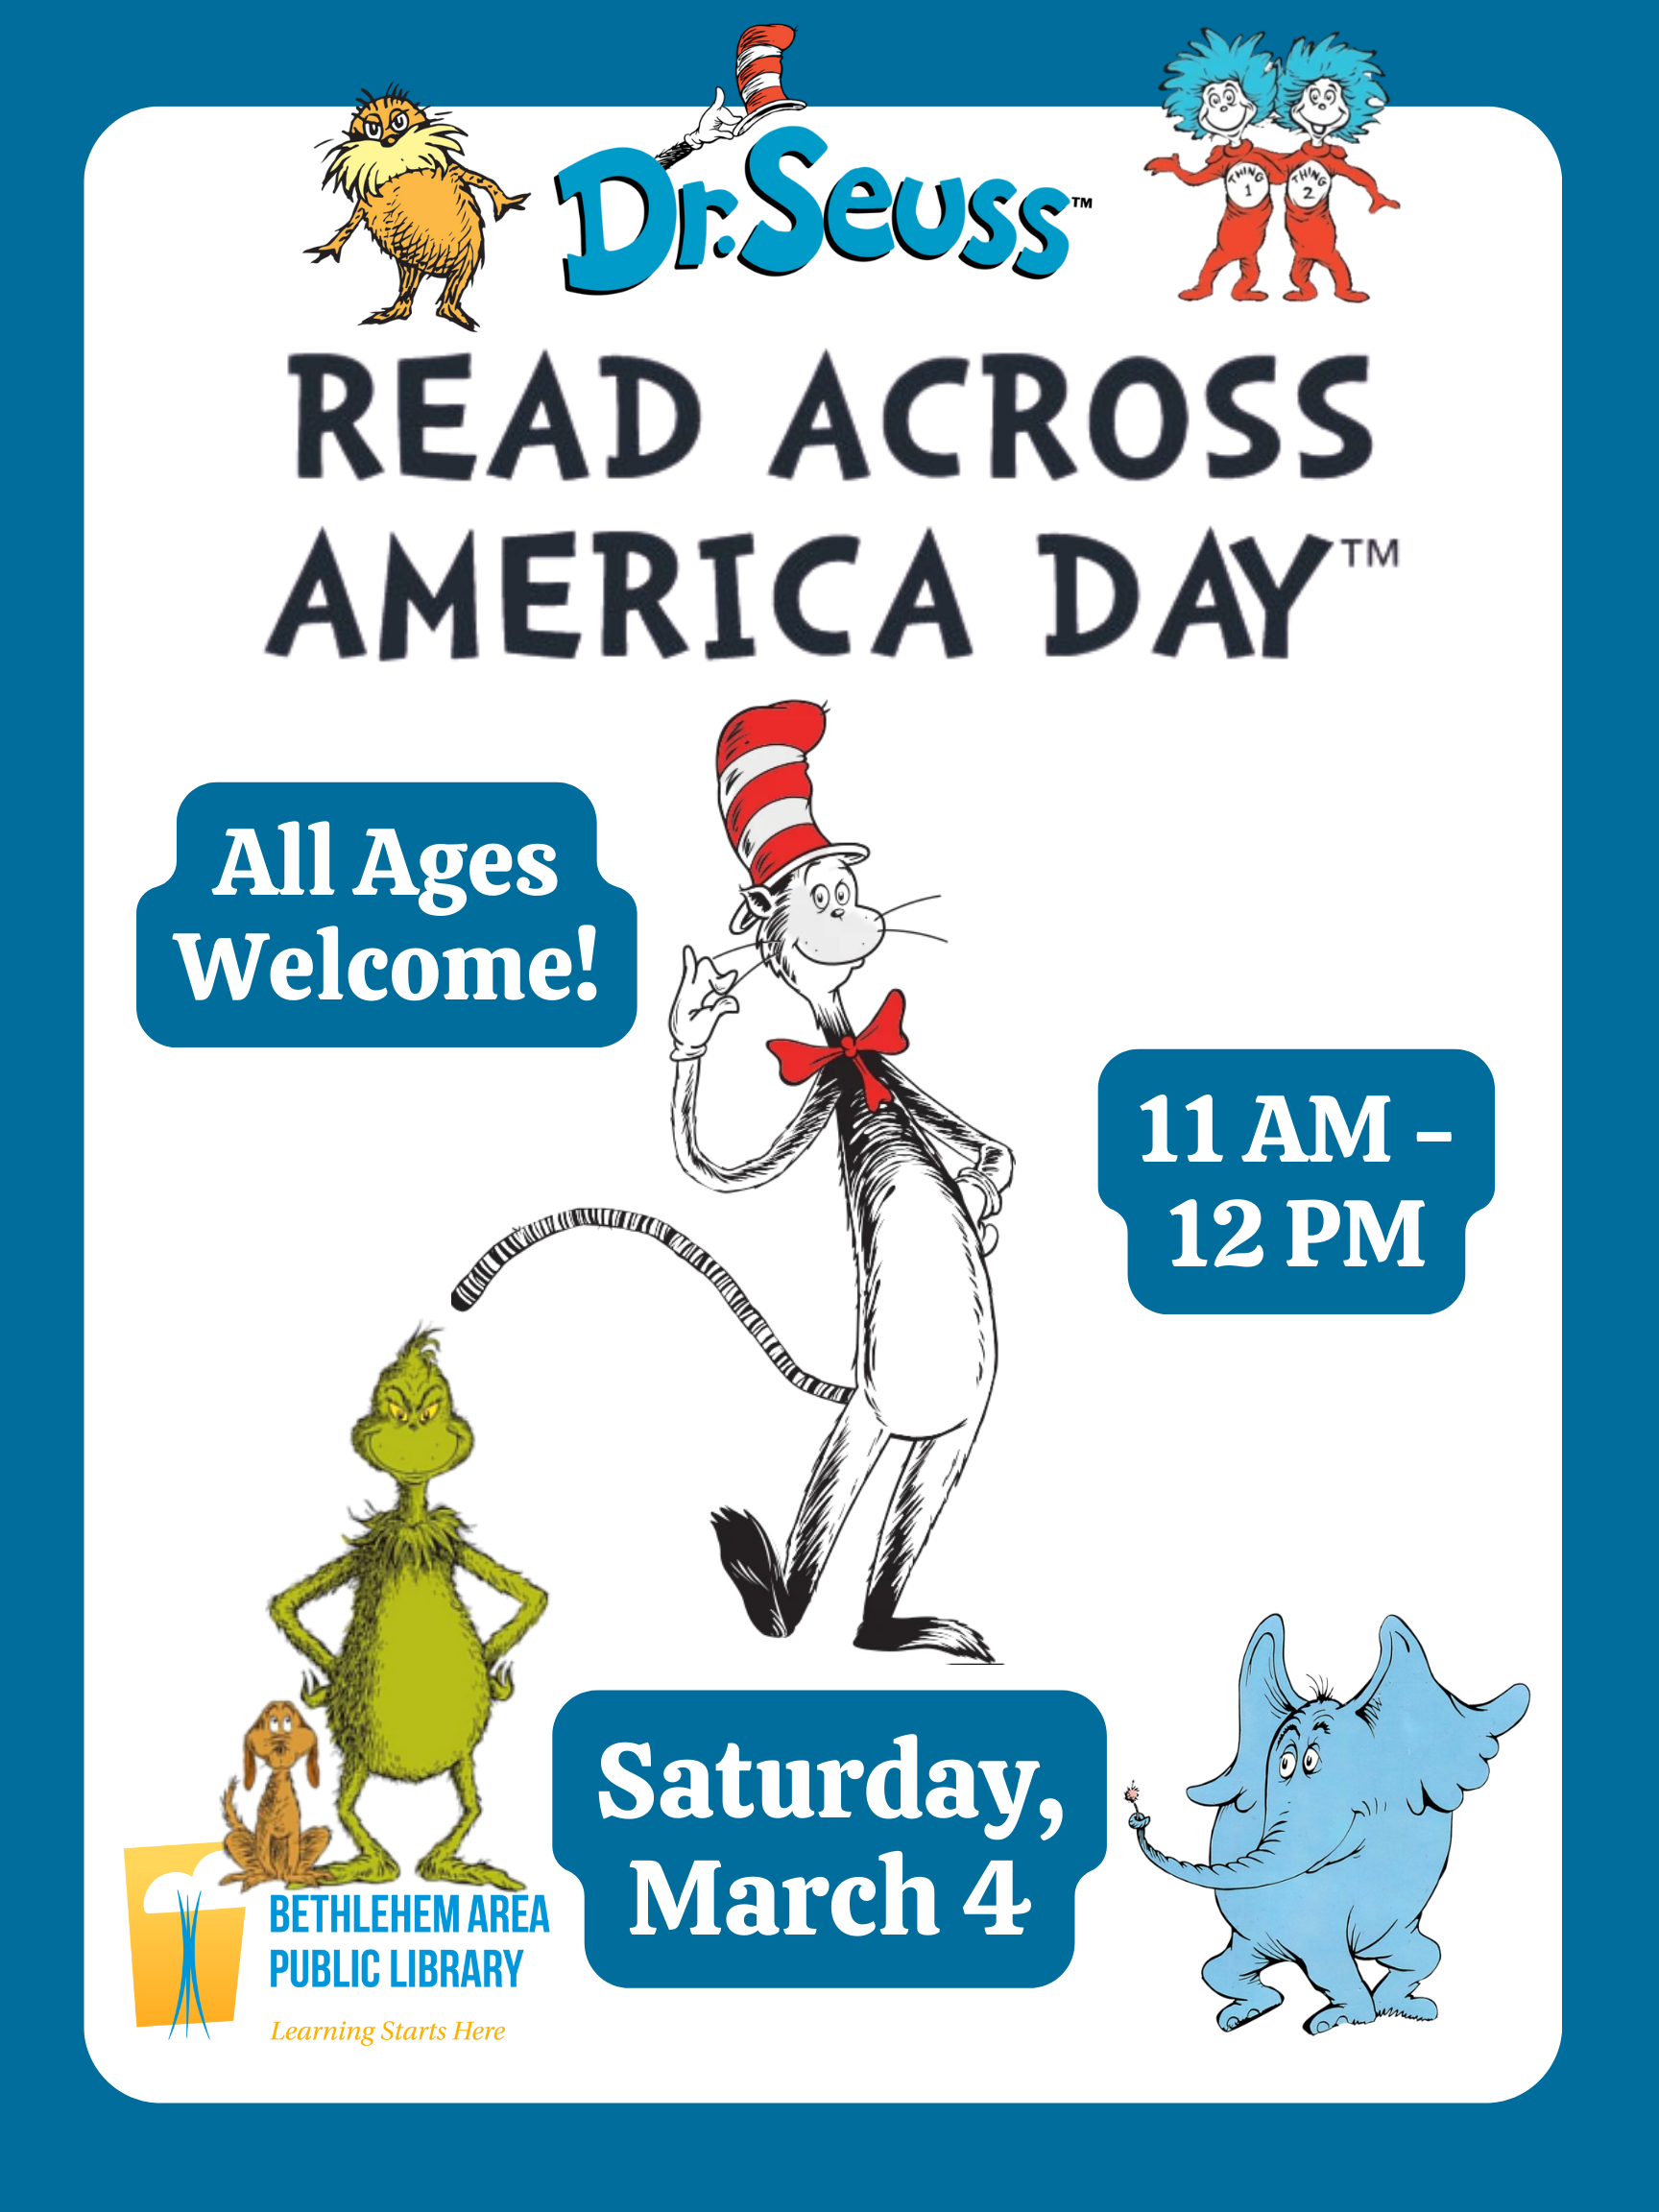 Dr. Seuss read across america day